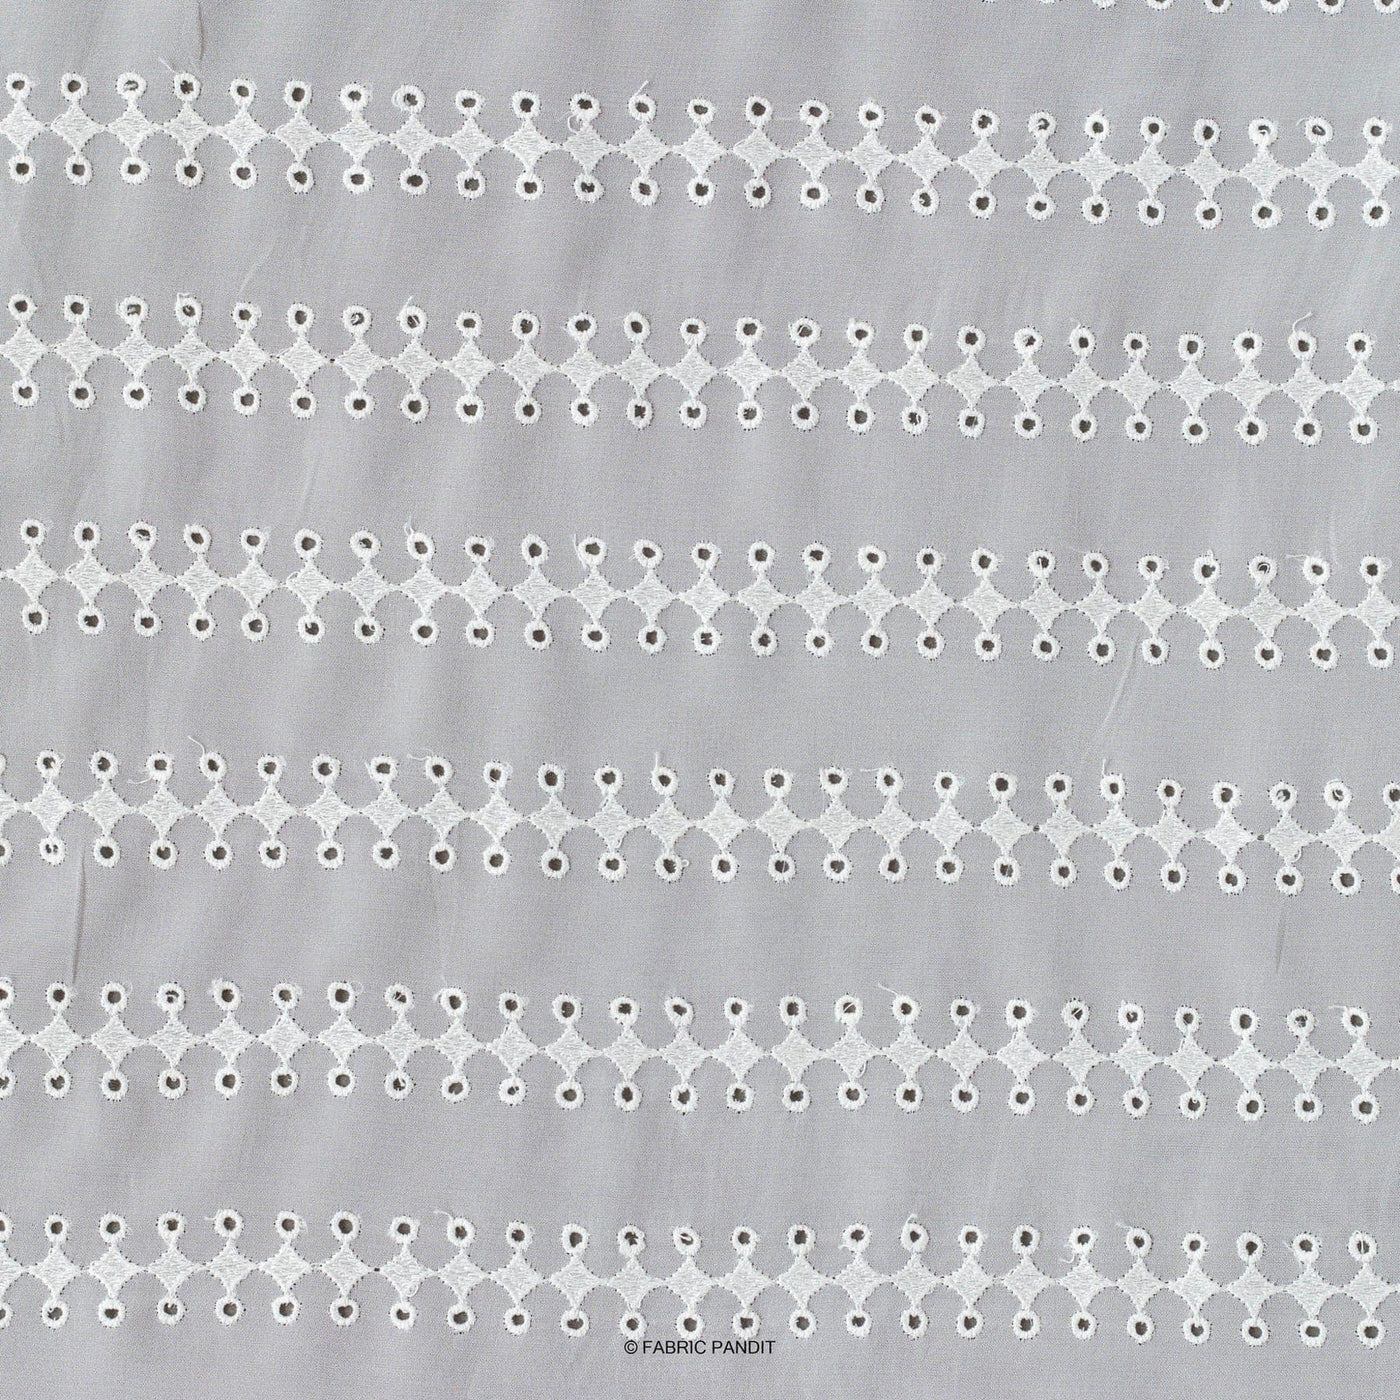 Fabric Pandit Fabric White Schifili Embroidered Diamond Stripes Borer Pattern Pure Georgette Fabric (Width 44 inches)